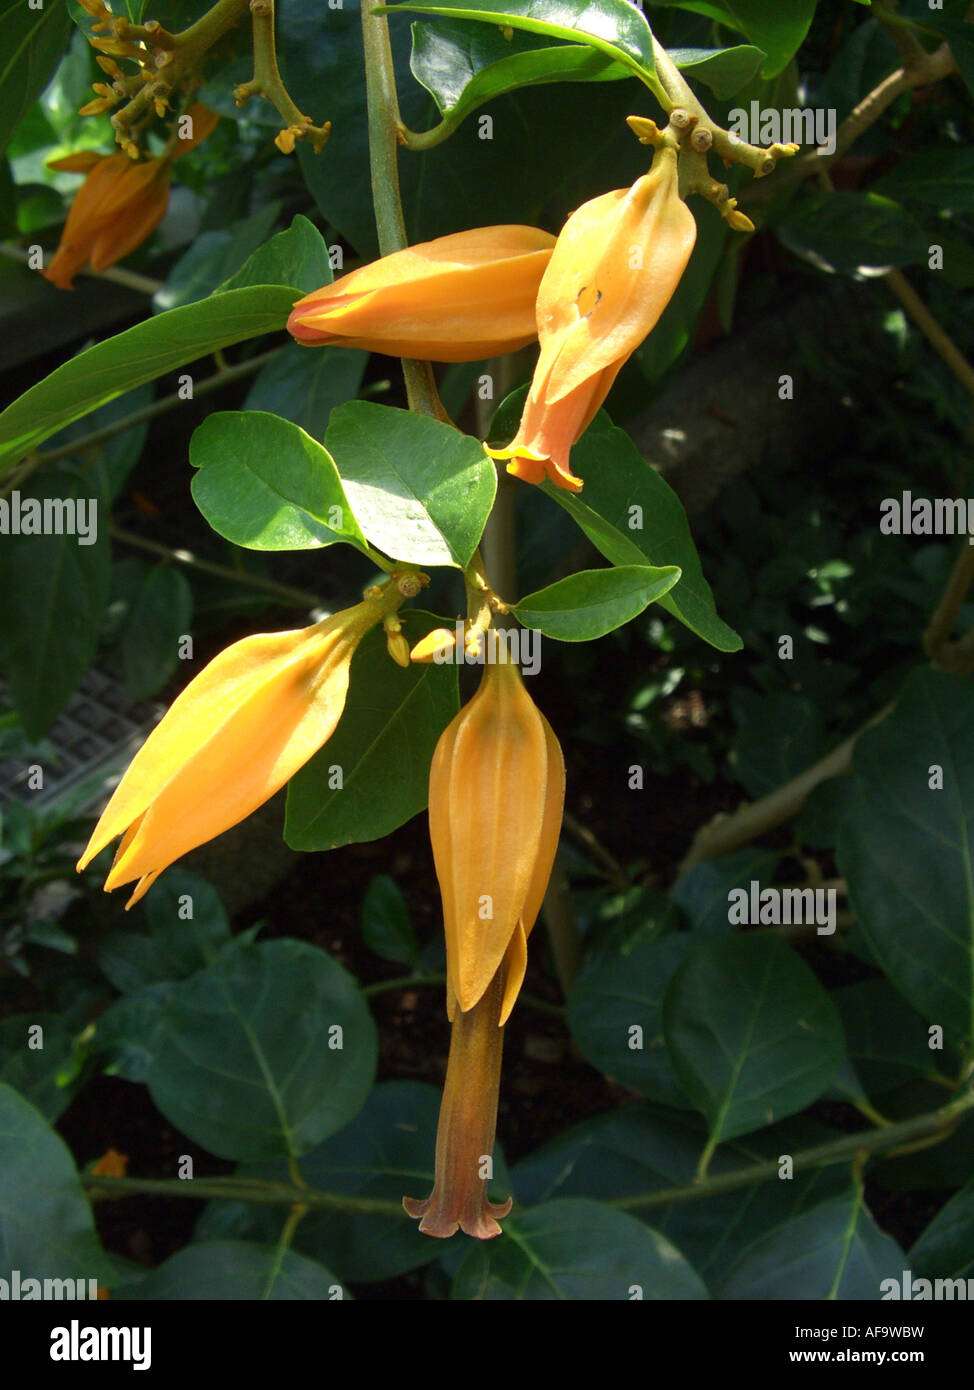 Goldfinger plant, Golf finger plant (Juanulloa mexicana, Juanulloa aurantiaca), flowers Stock Photo